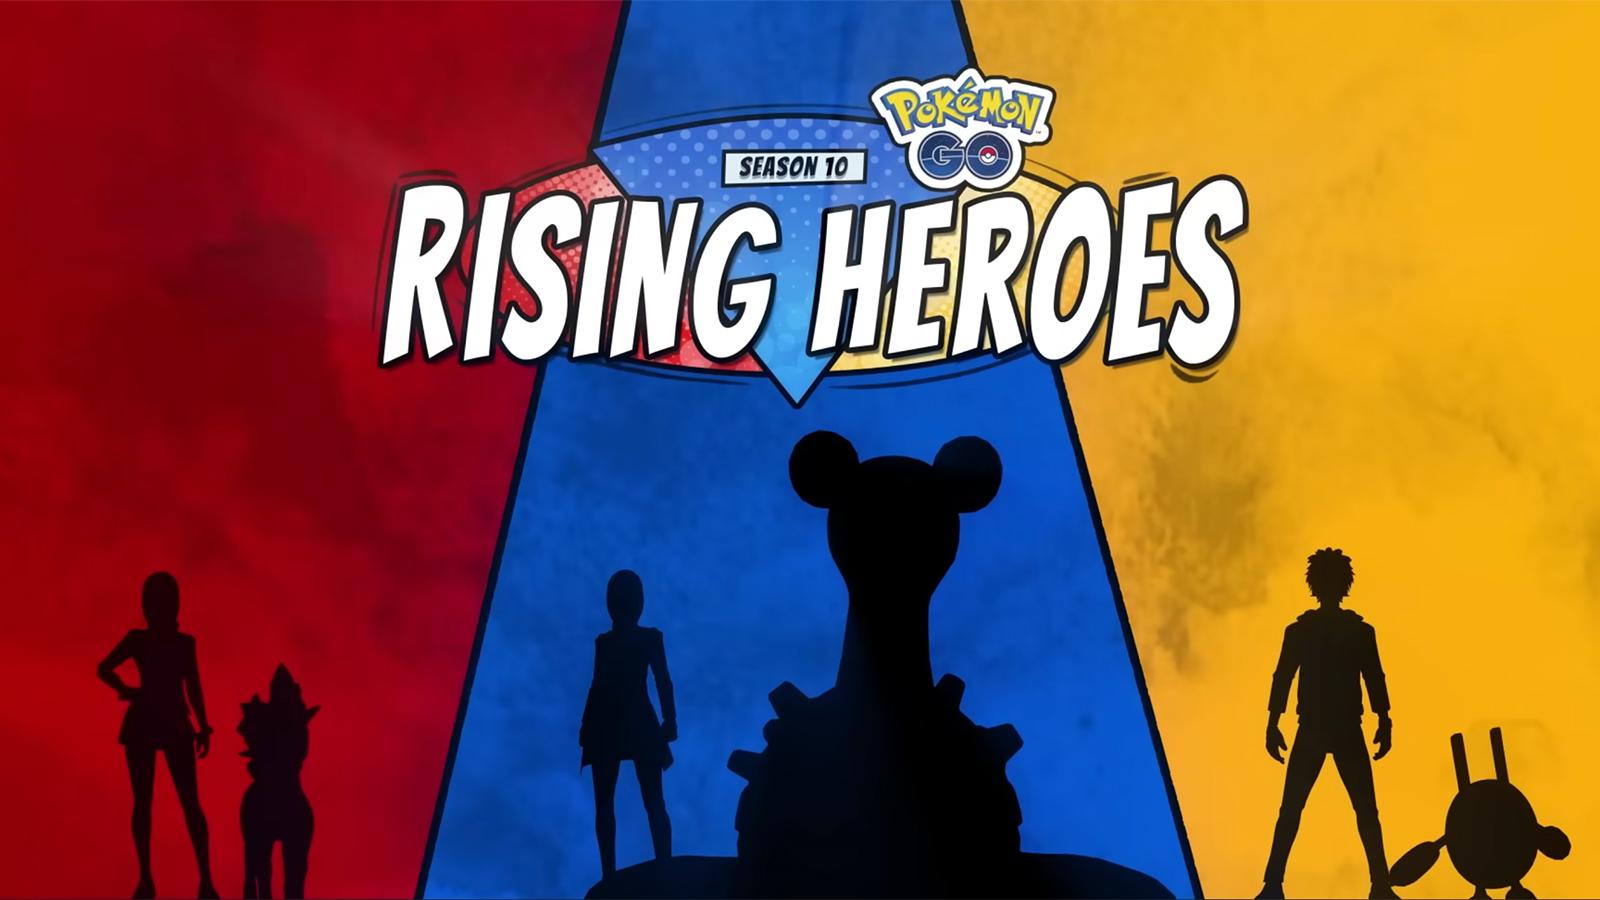 A poster for Pokemon Go Rising Heroes Season 10